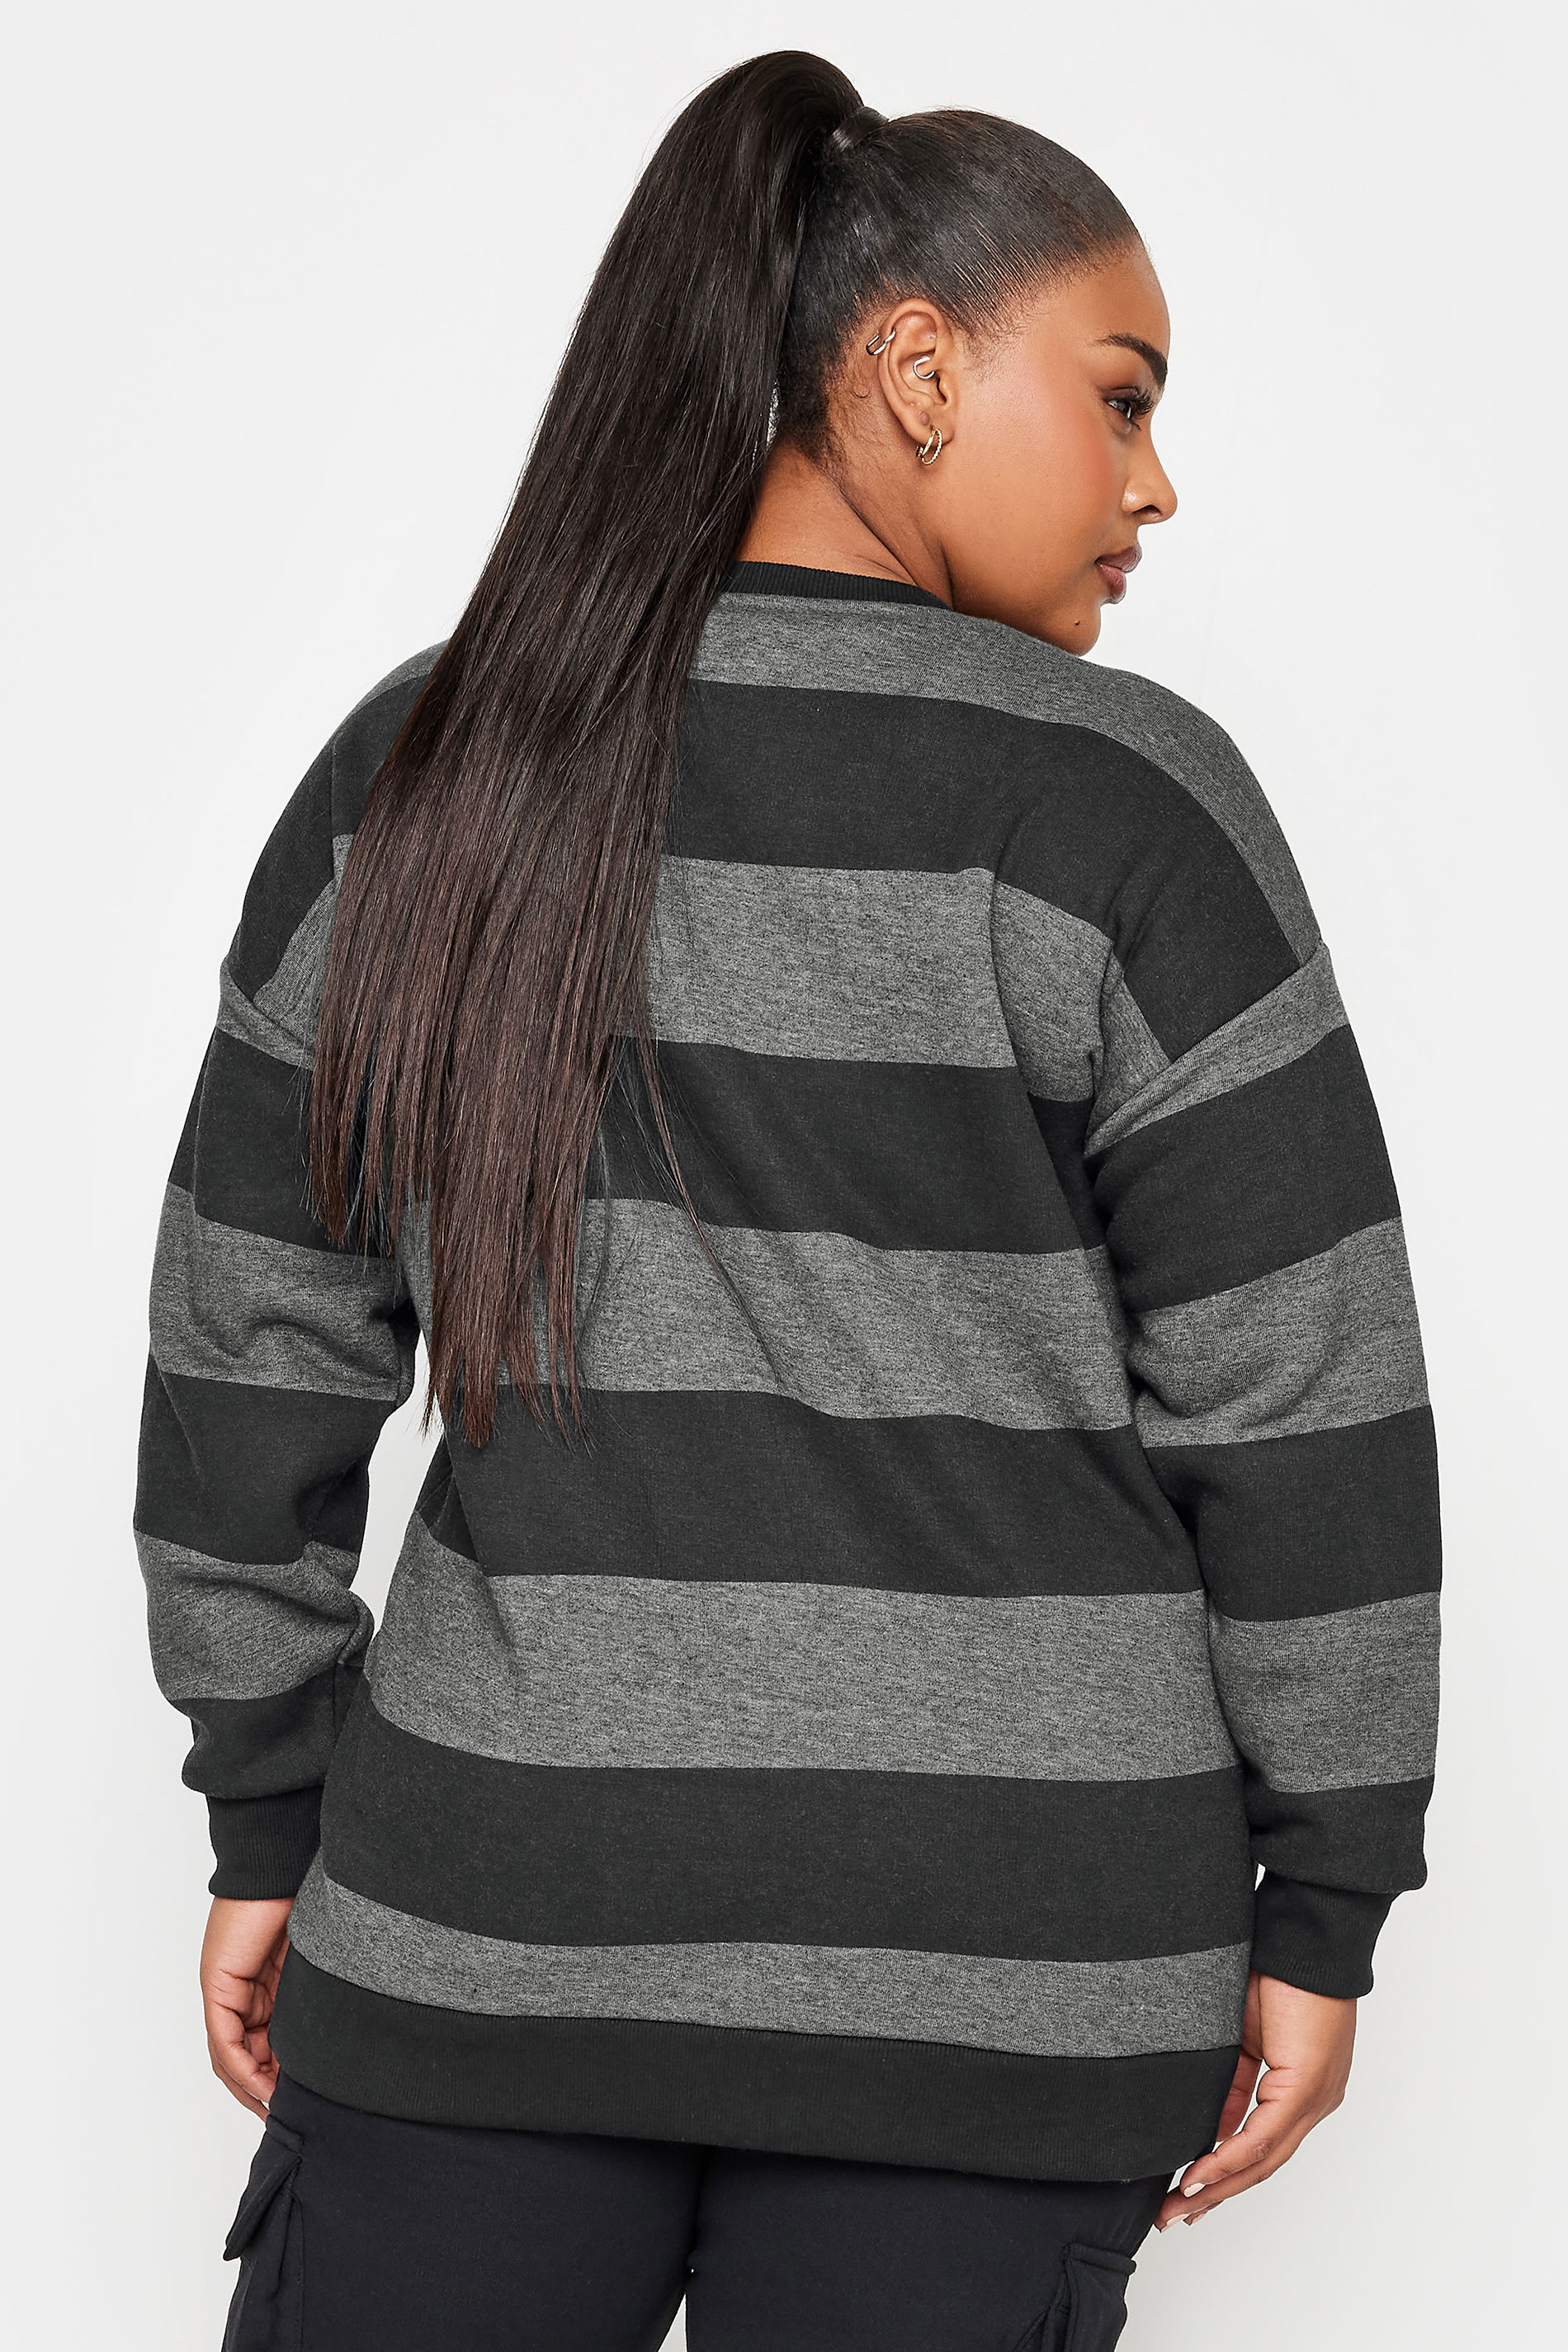 YOURS Plus Size Black Stripe Sweatshirt | Yours Clothing 3